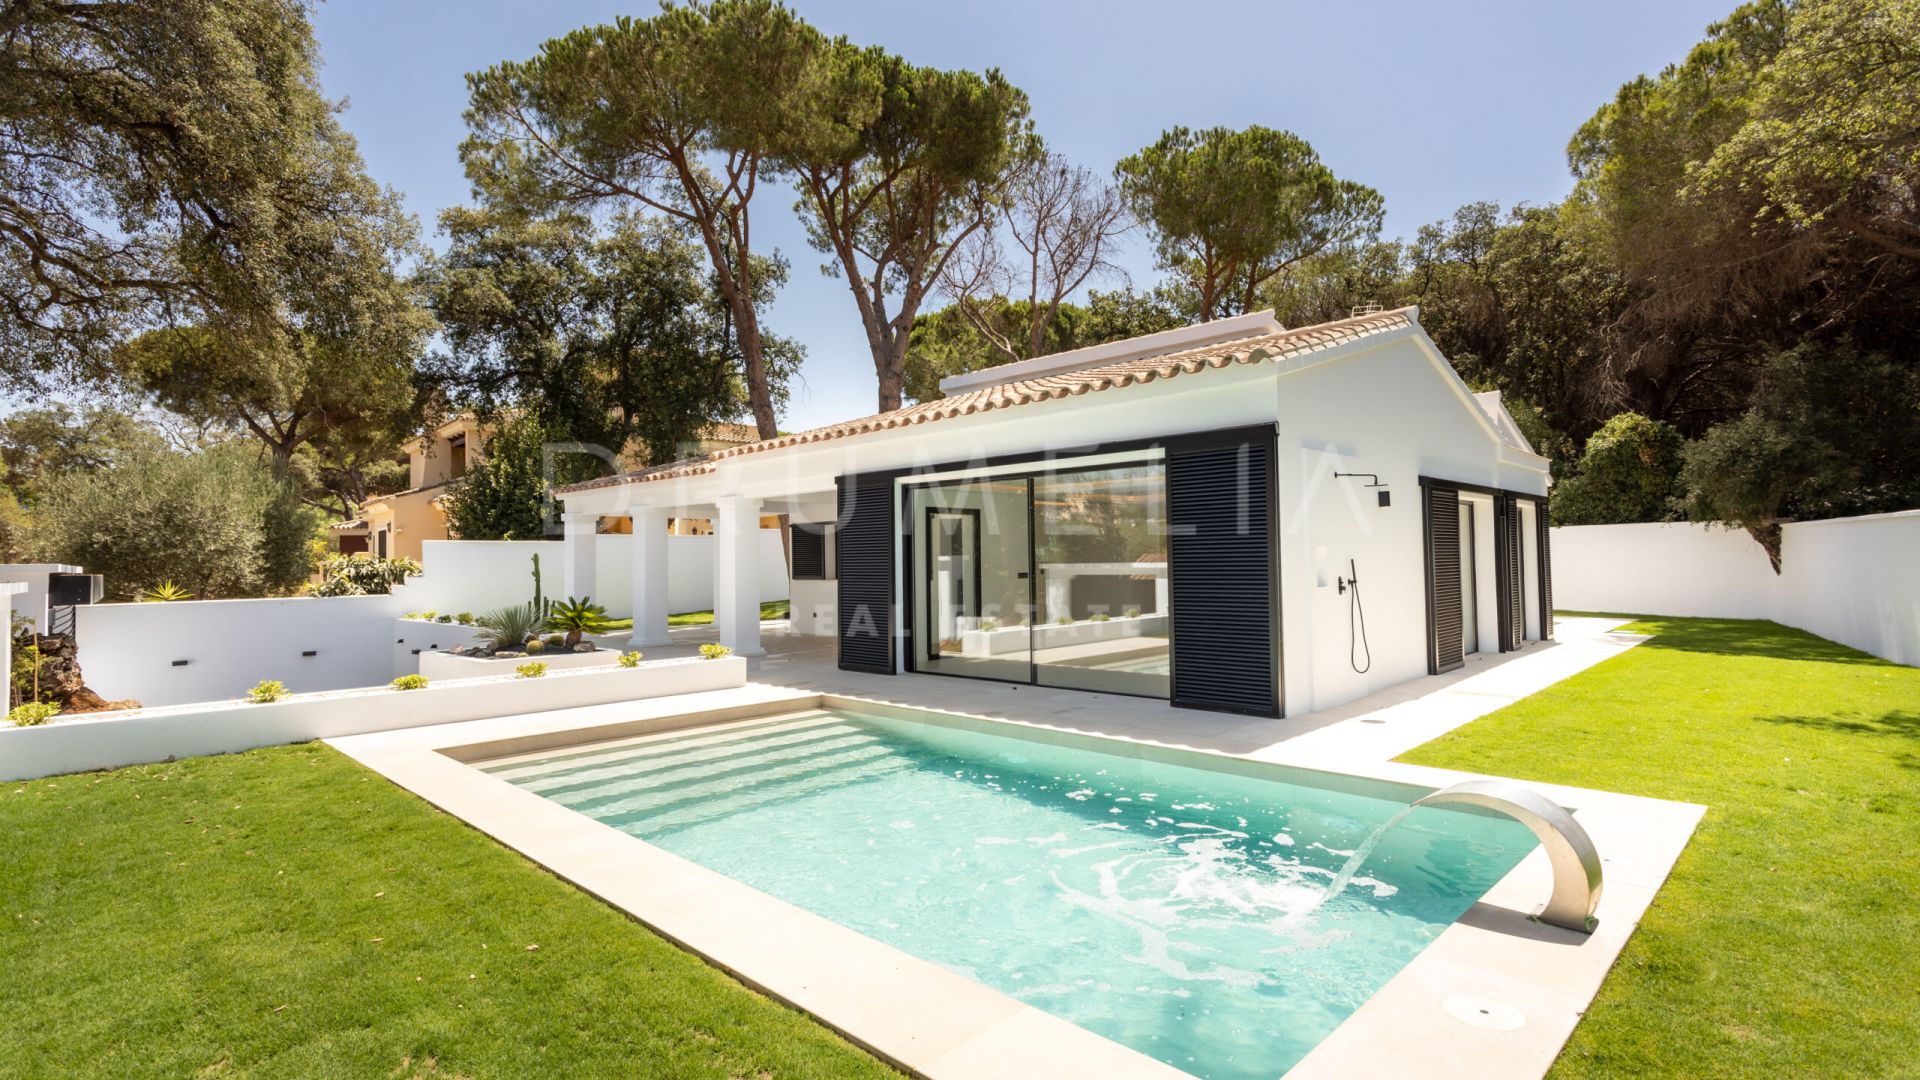 Charming Mediterranean luxury villa close to the beach in popular area of Elviria, East of Marbella.